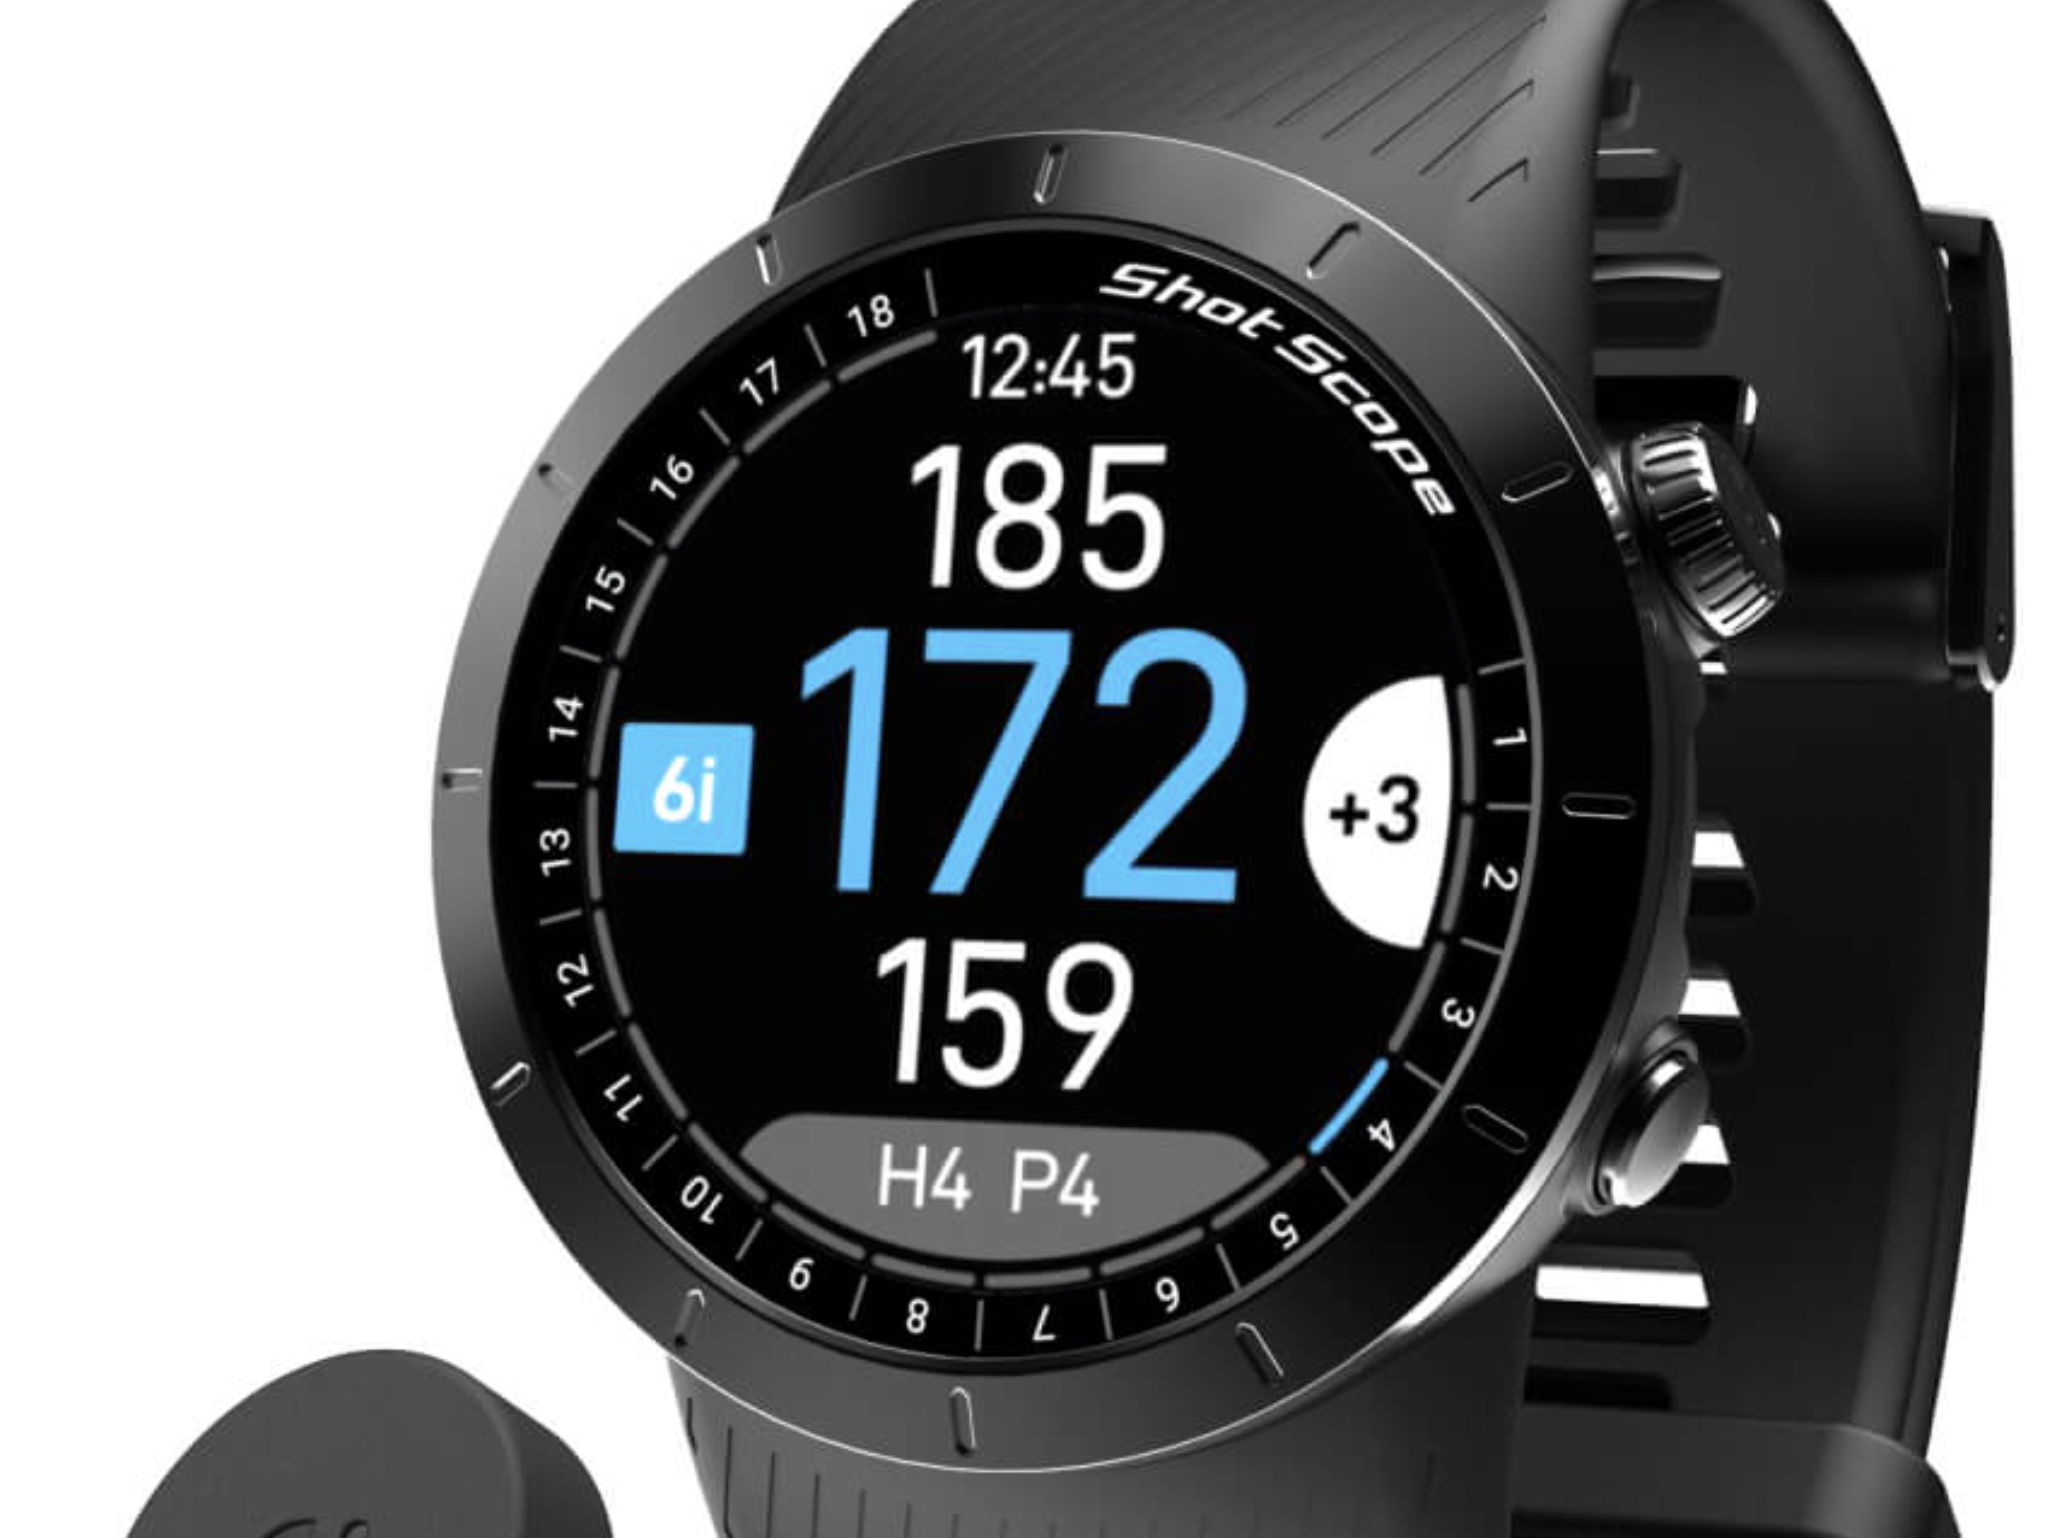 Shot Scope multi-function X5 GPS golf watch – GolfWRX